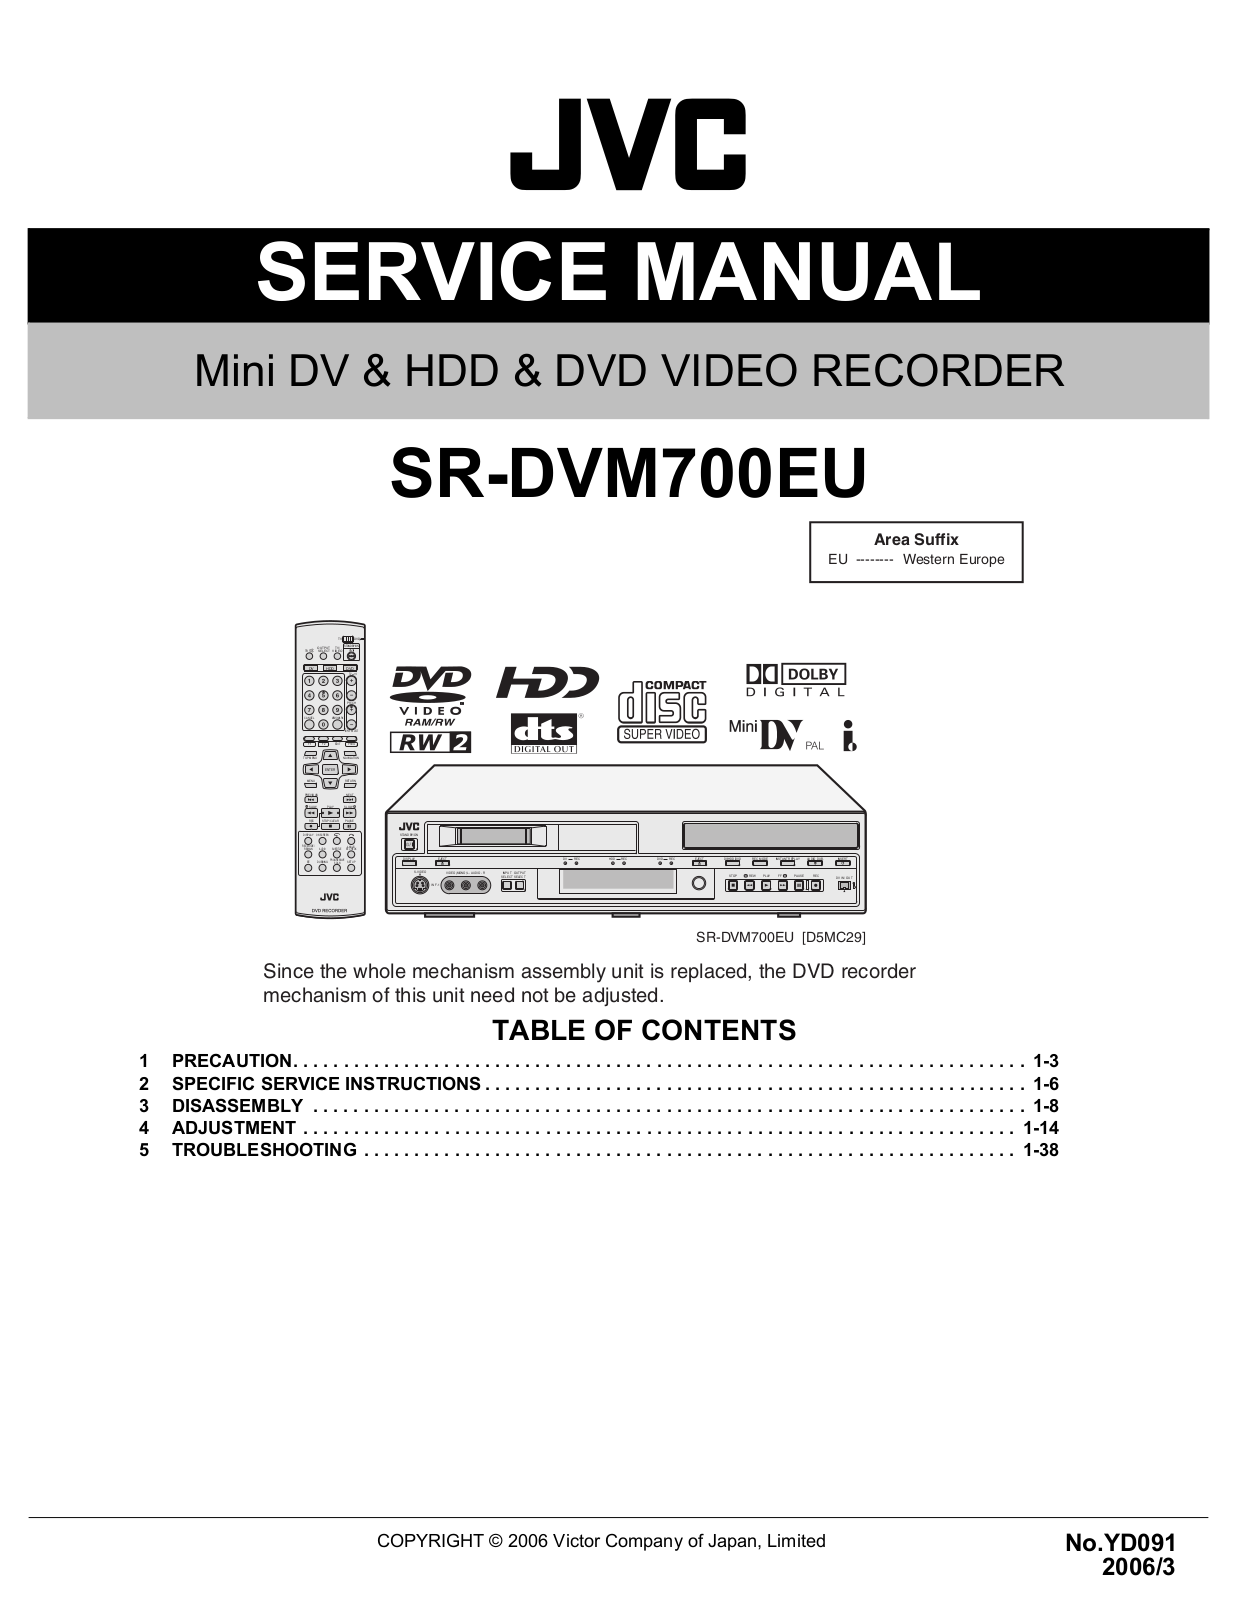 Jvc SR-DVM700-EU Service Manual